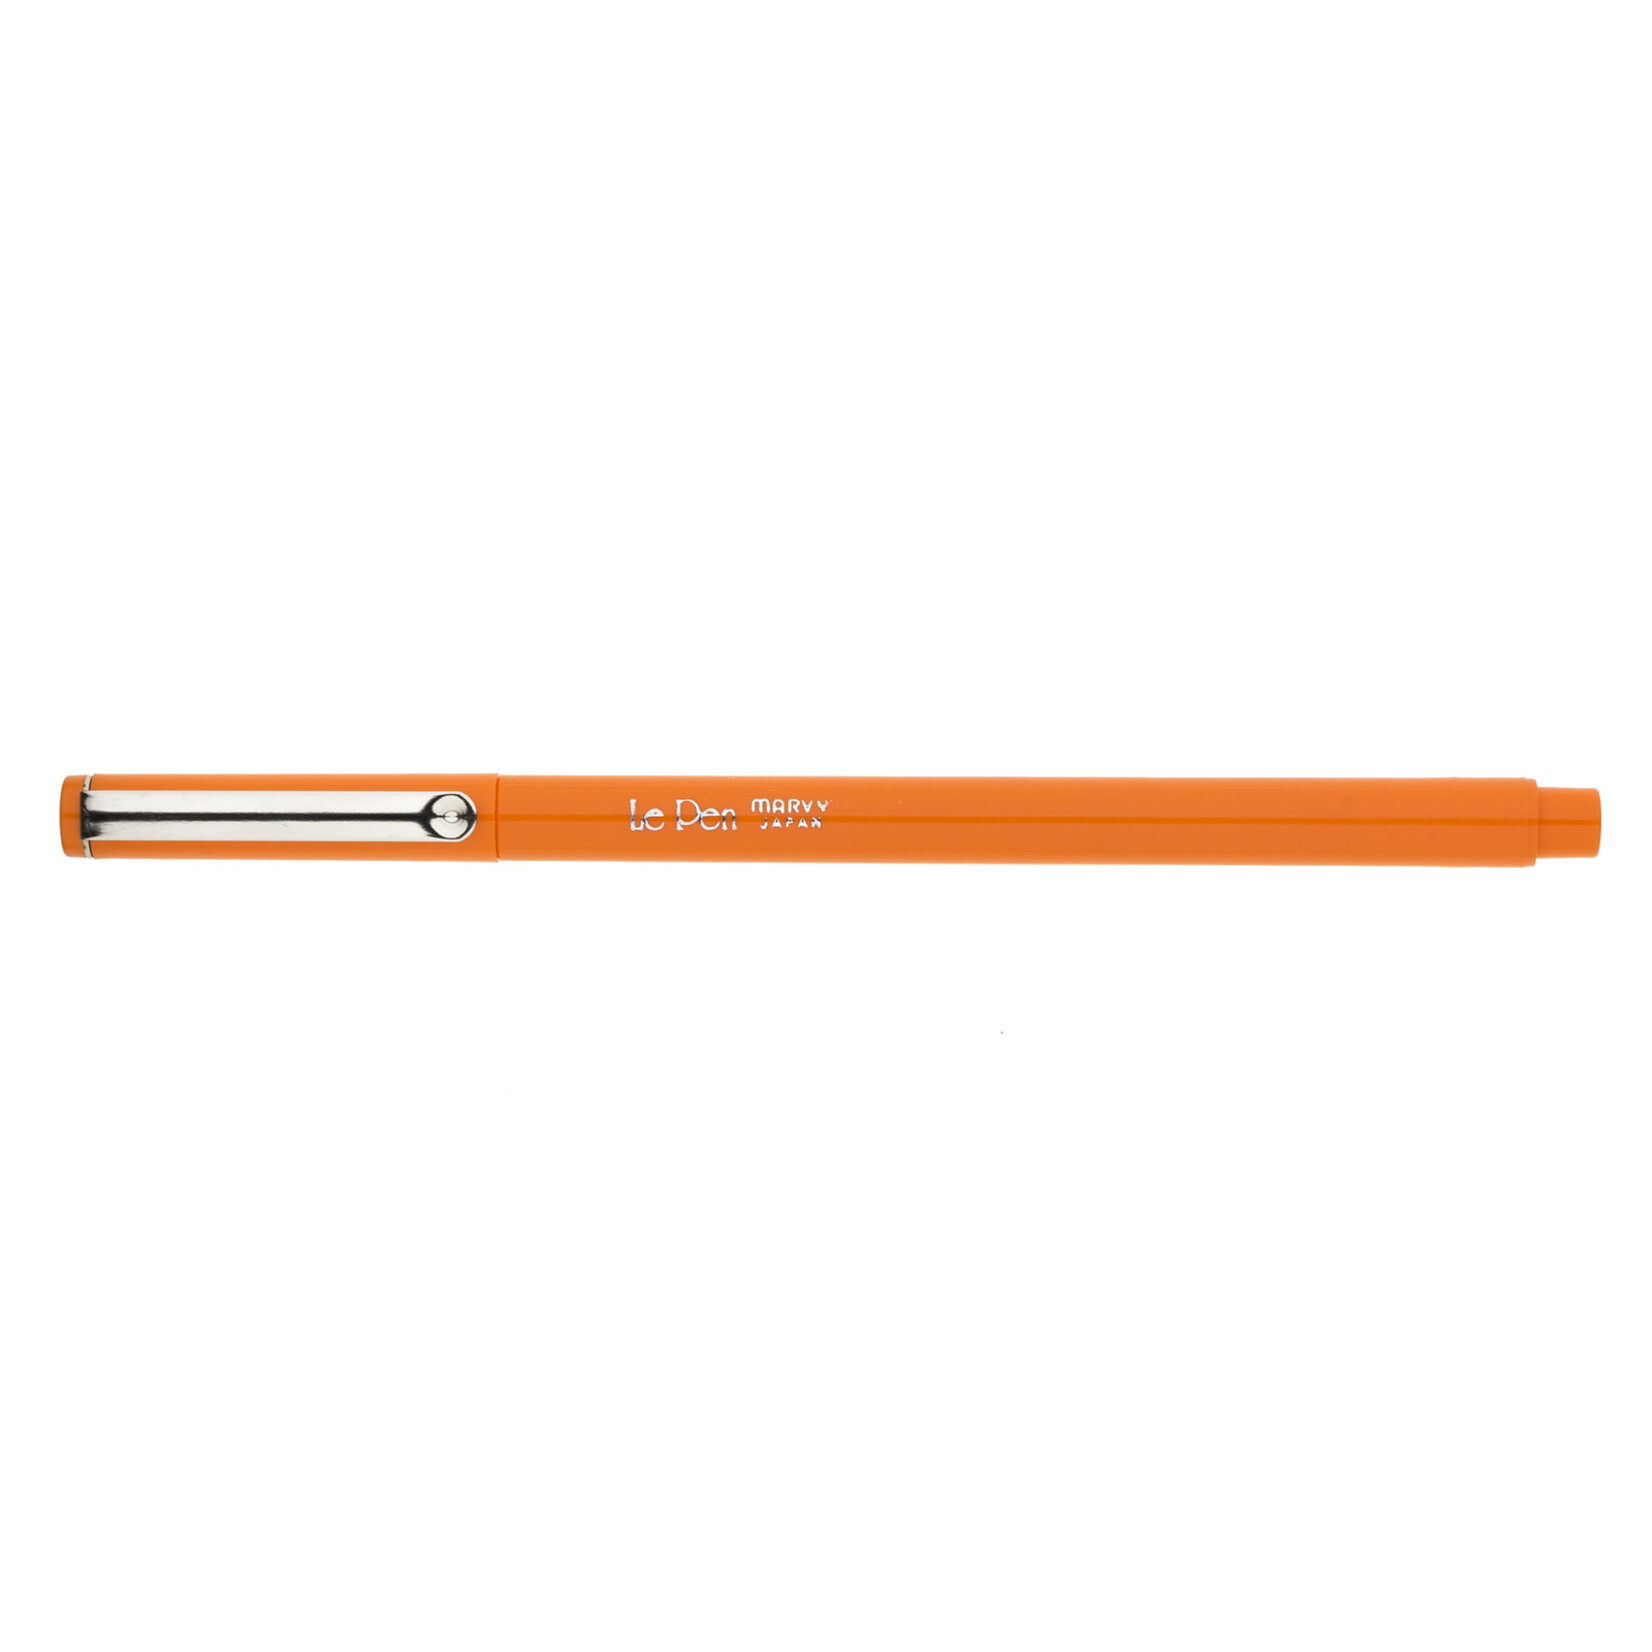 Uchida Le Pen Marker Orange .3mm